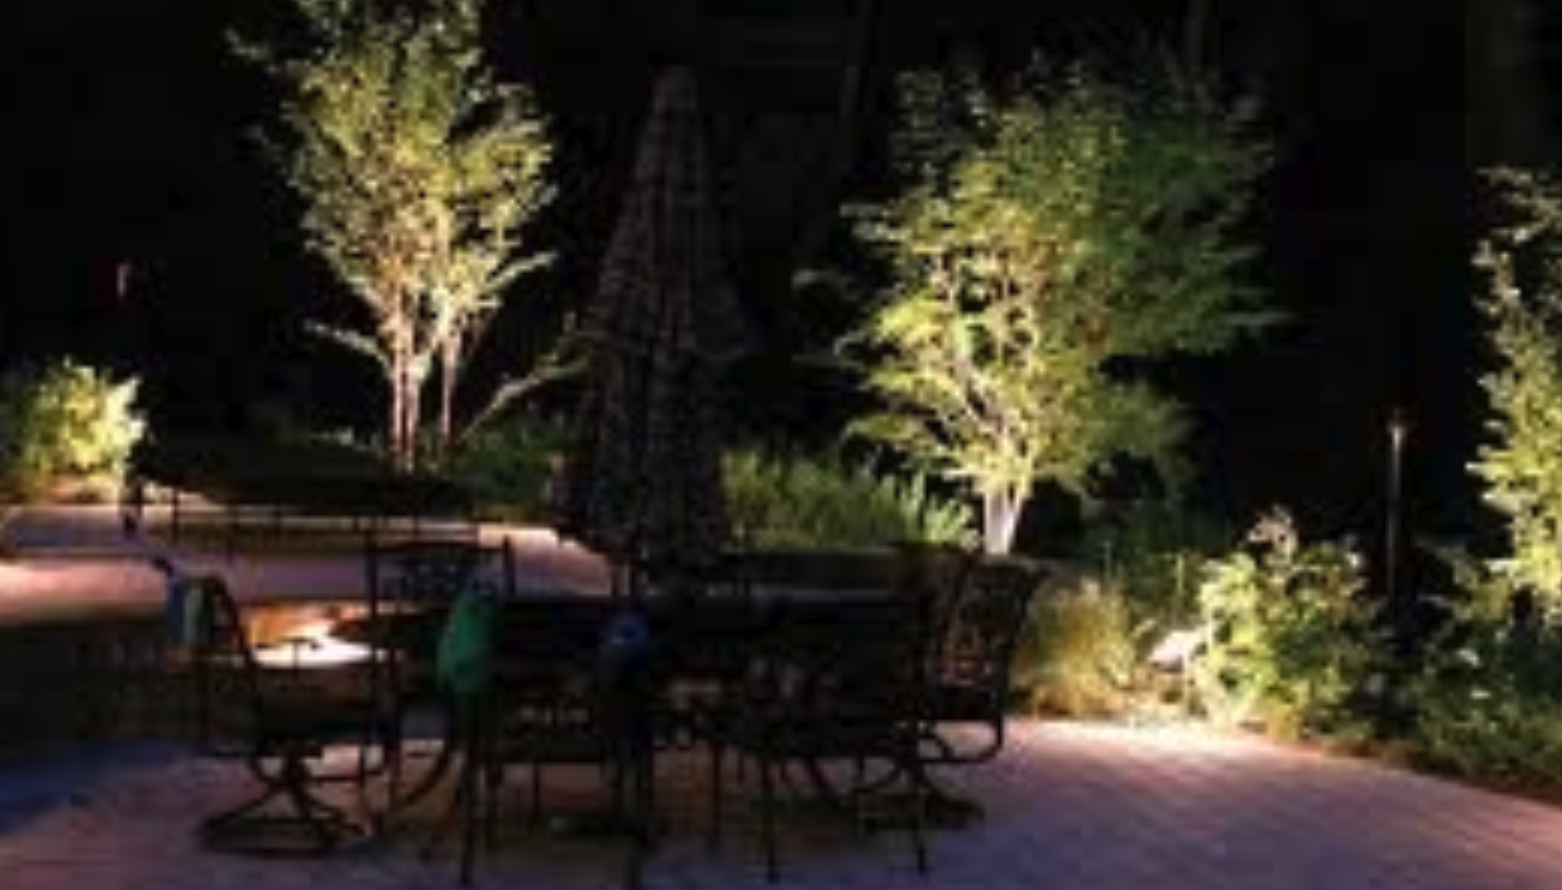 Seasonal Yard Work does outdoor lighting | Avon, OH